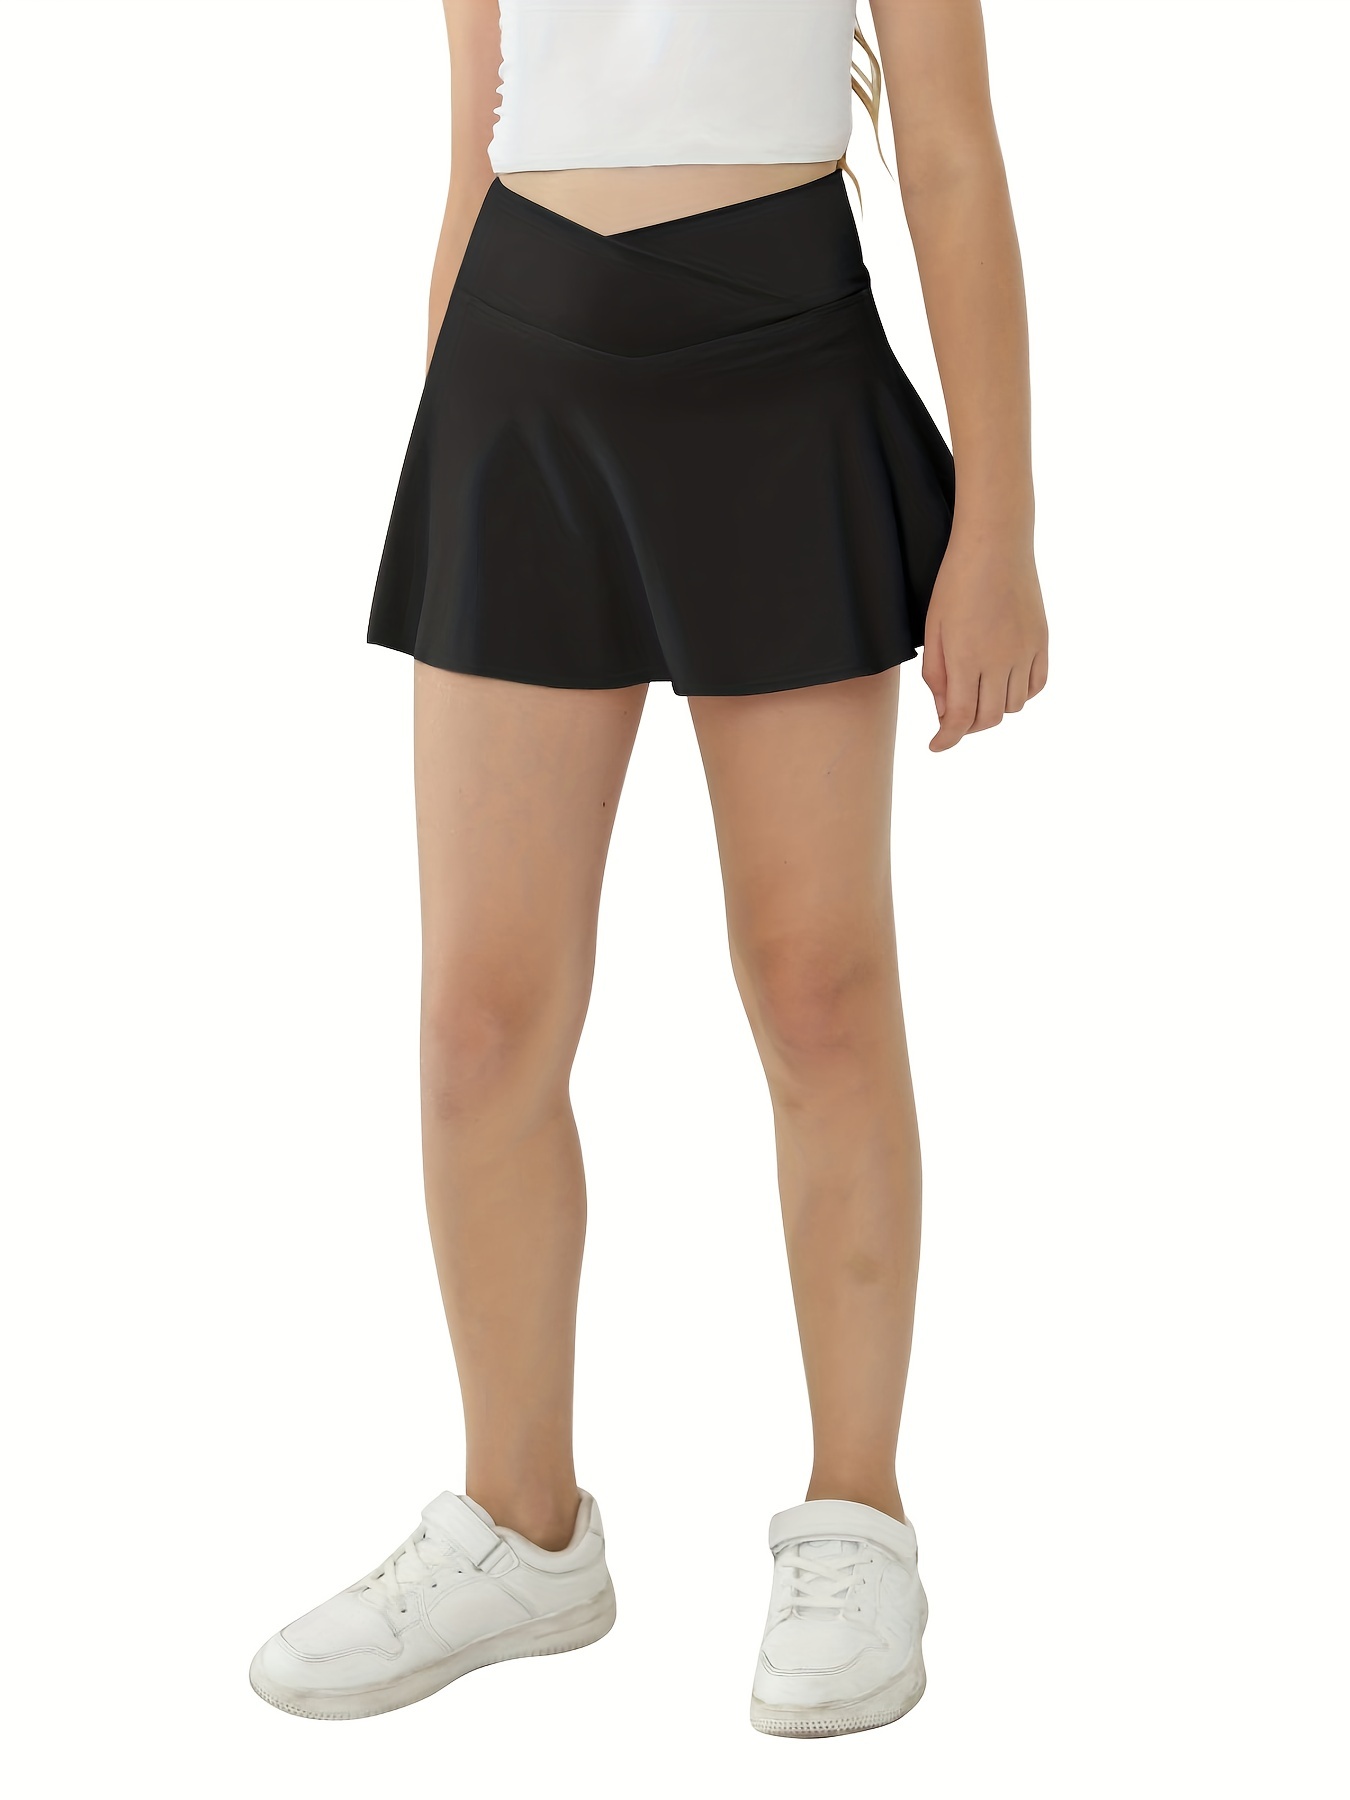 Skorts Skirt for Women with Pockets Golf Tennis Skort Athletic Skirt High  Waisted Casual Dressy